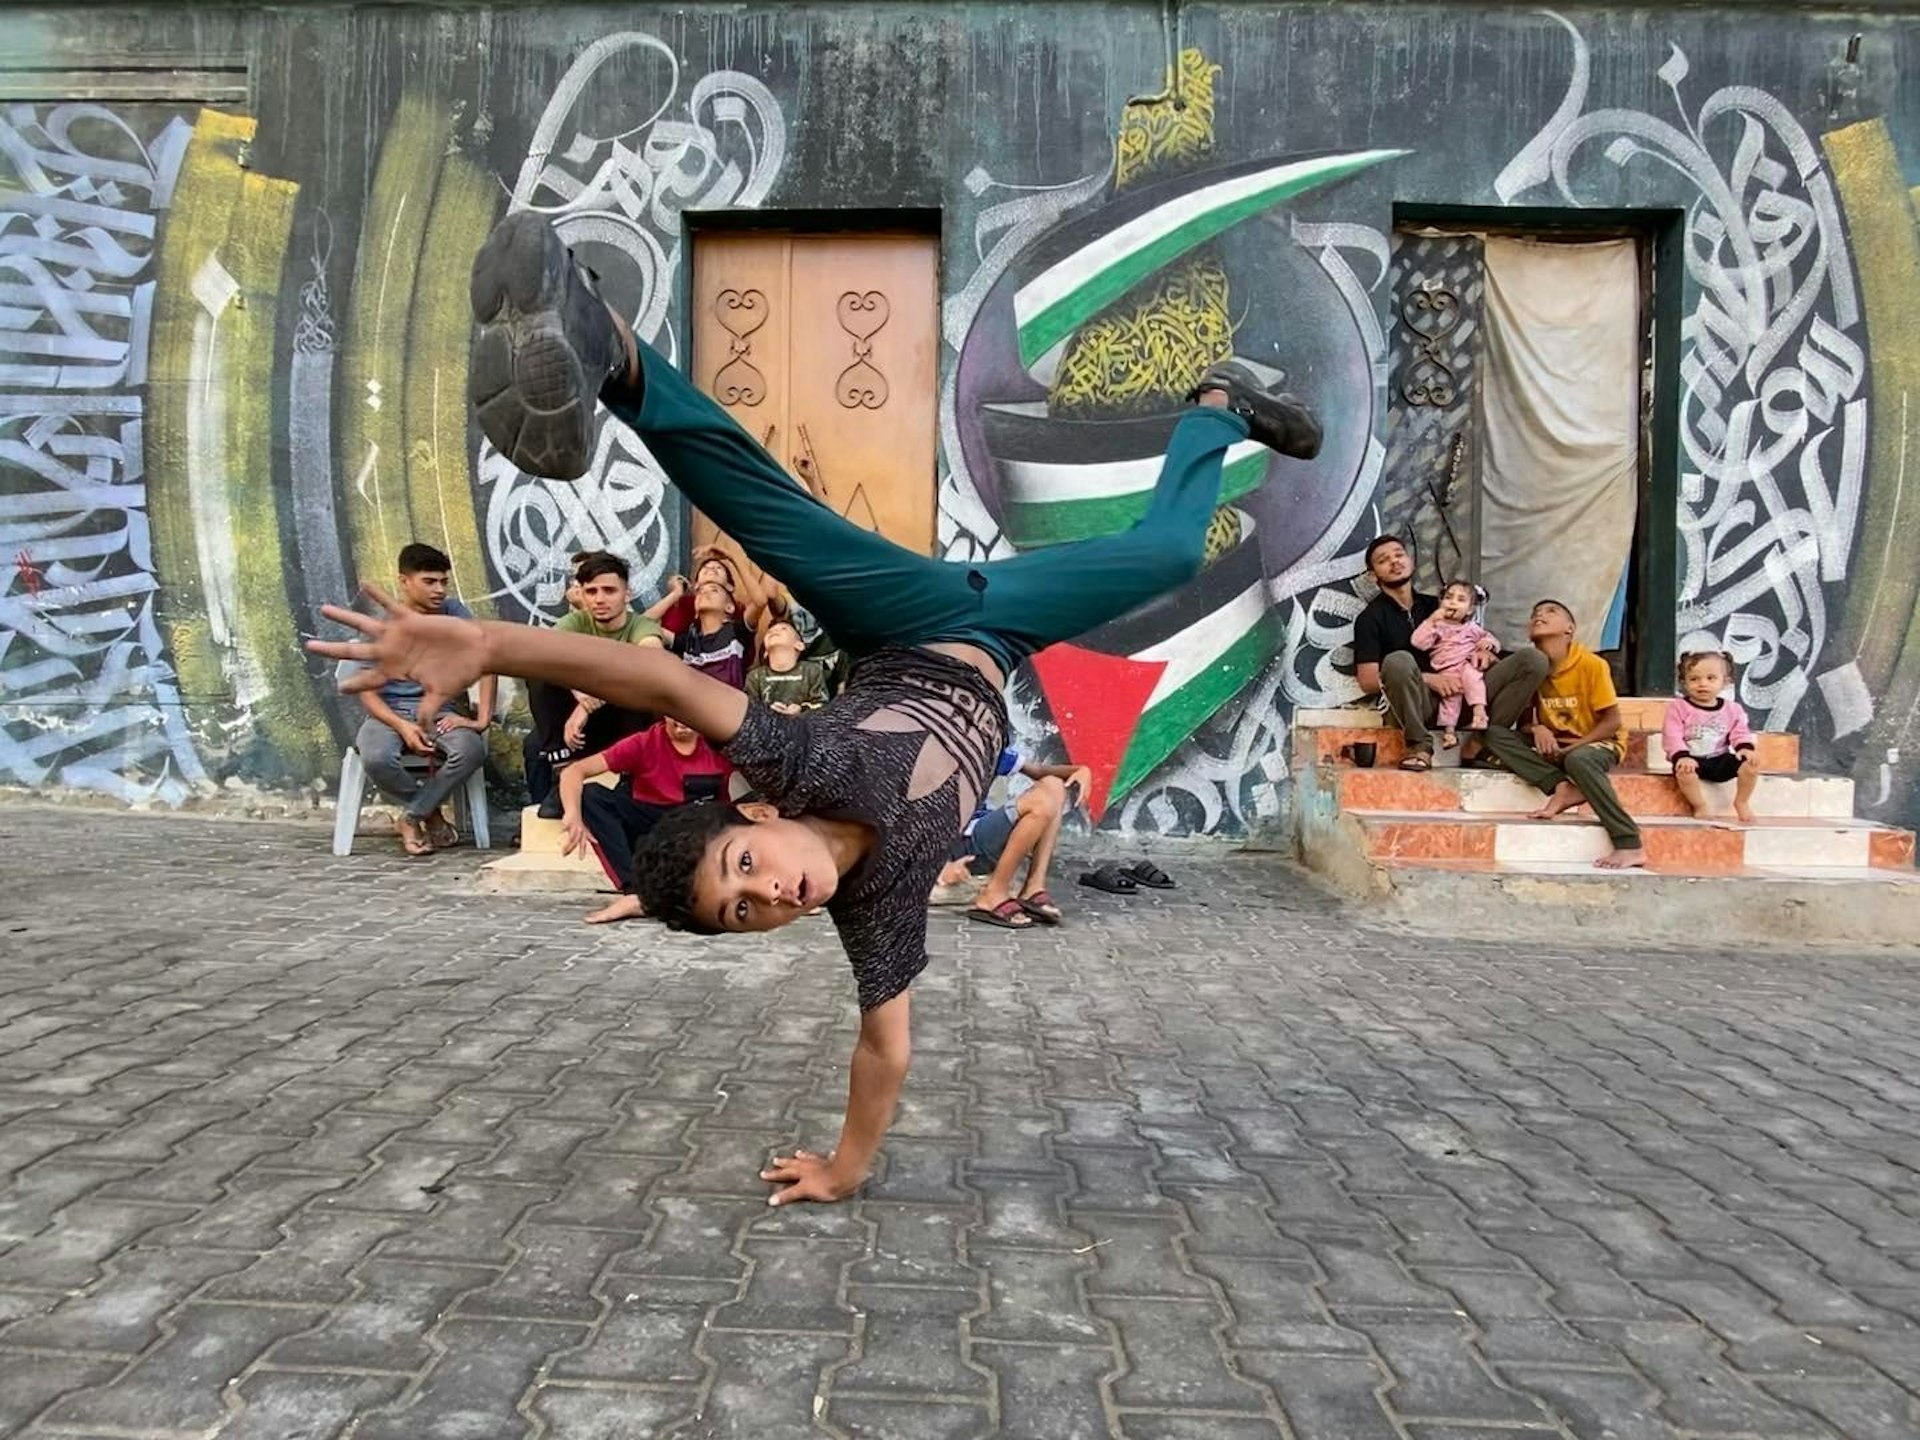 The Gaza breakdancing crew helping children escape the trauma of war